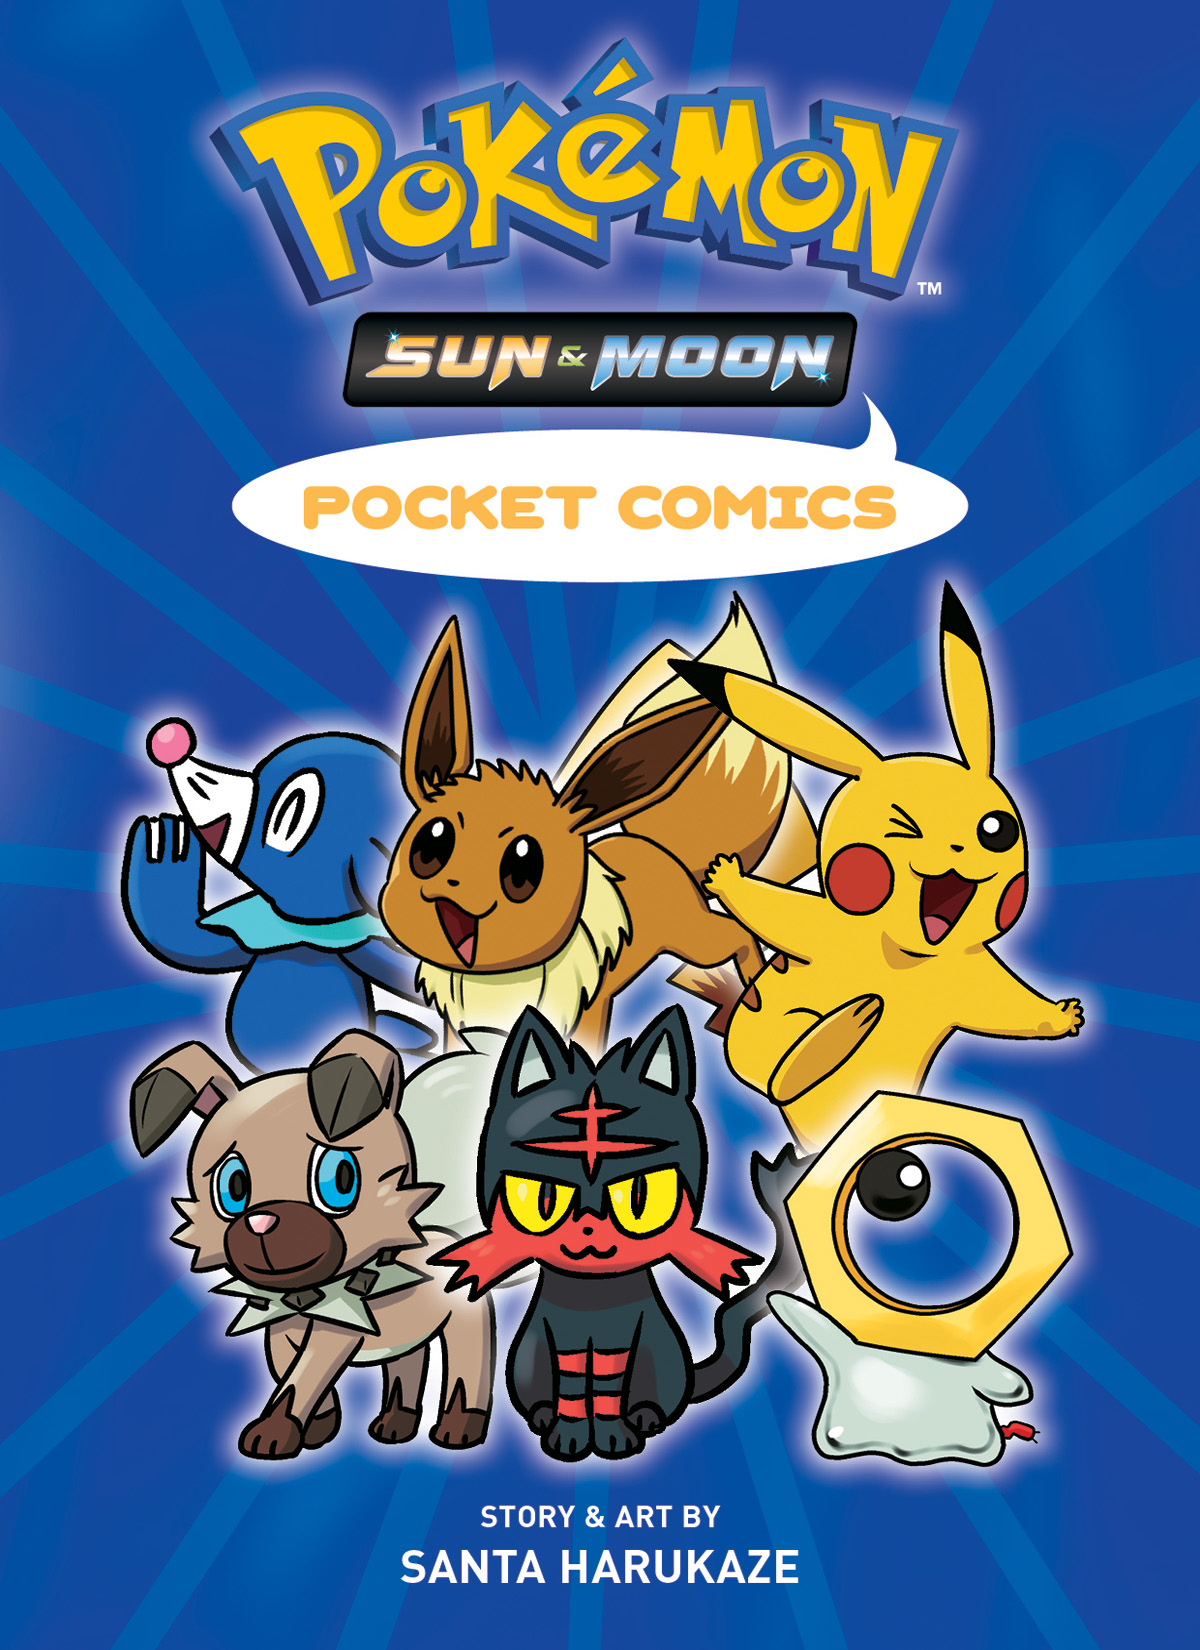 Pokémon Pocket Comics Sun & Moon Graphic Novel